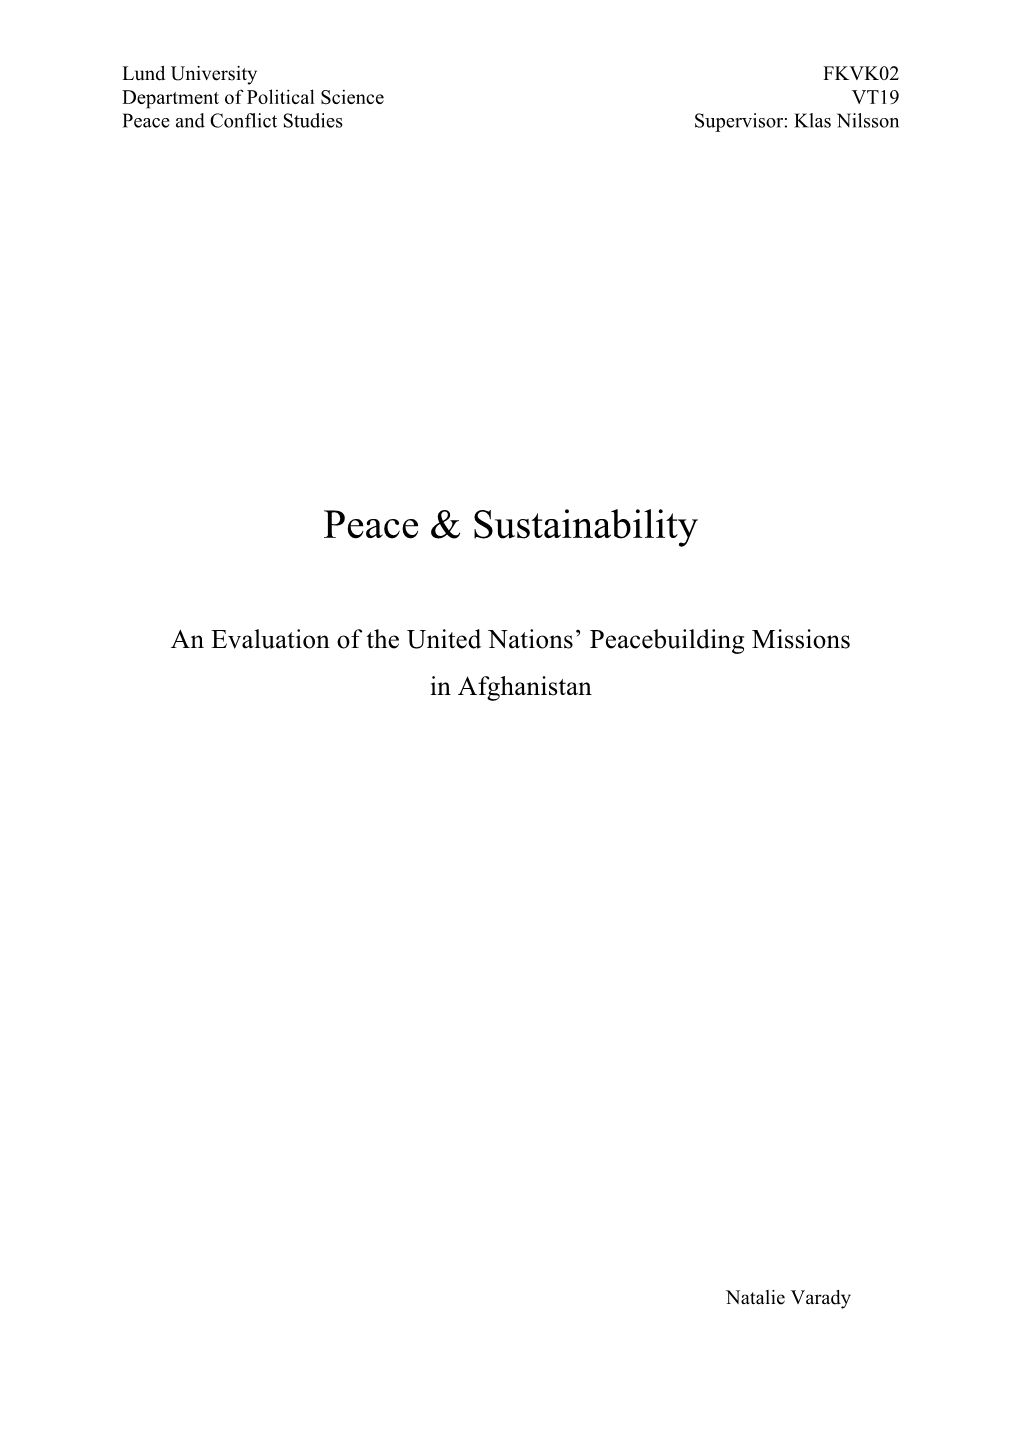 Peace & Sustainability